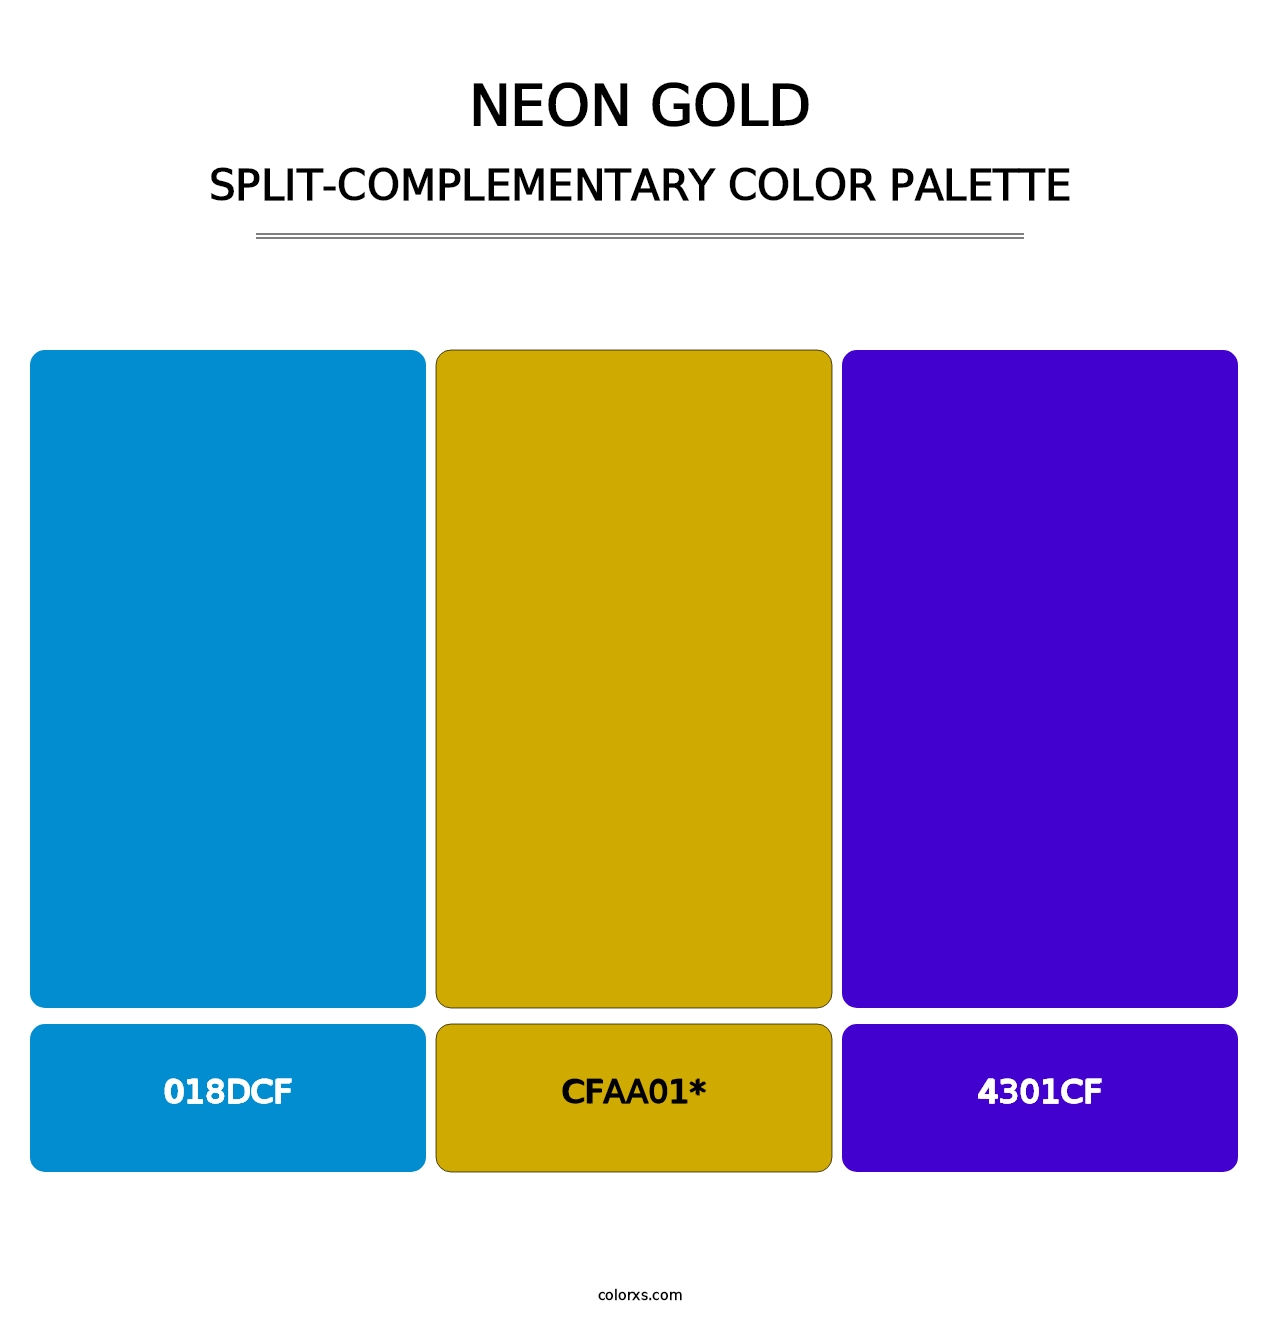 Neon Gold - Split-Complementary Color Palette